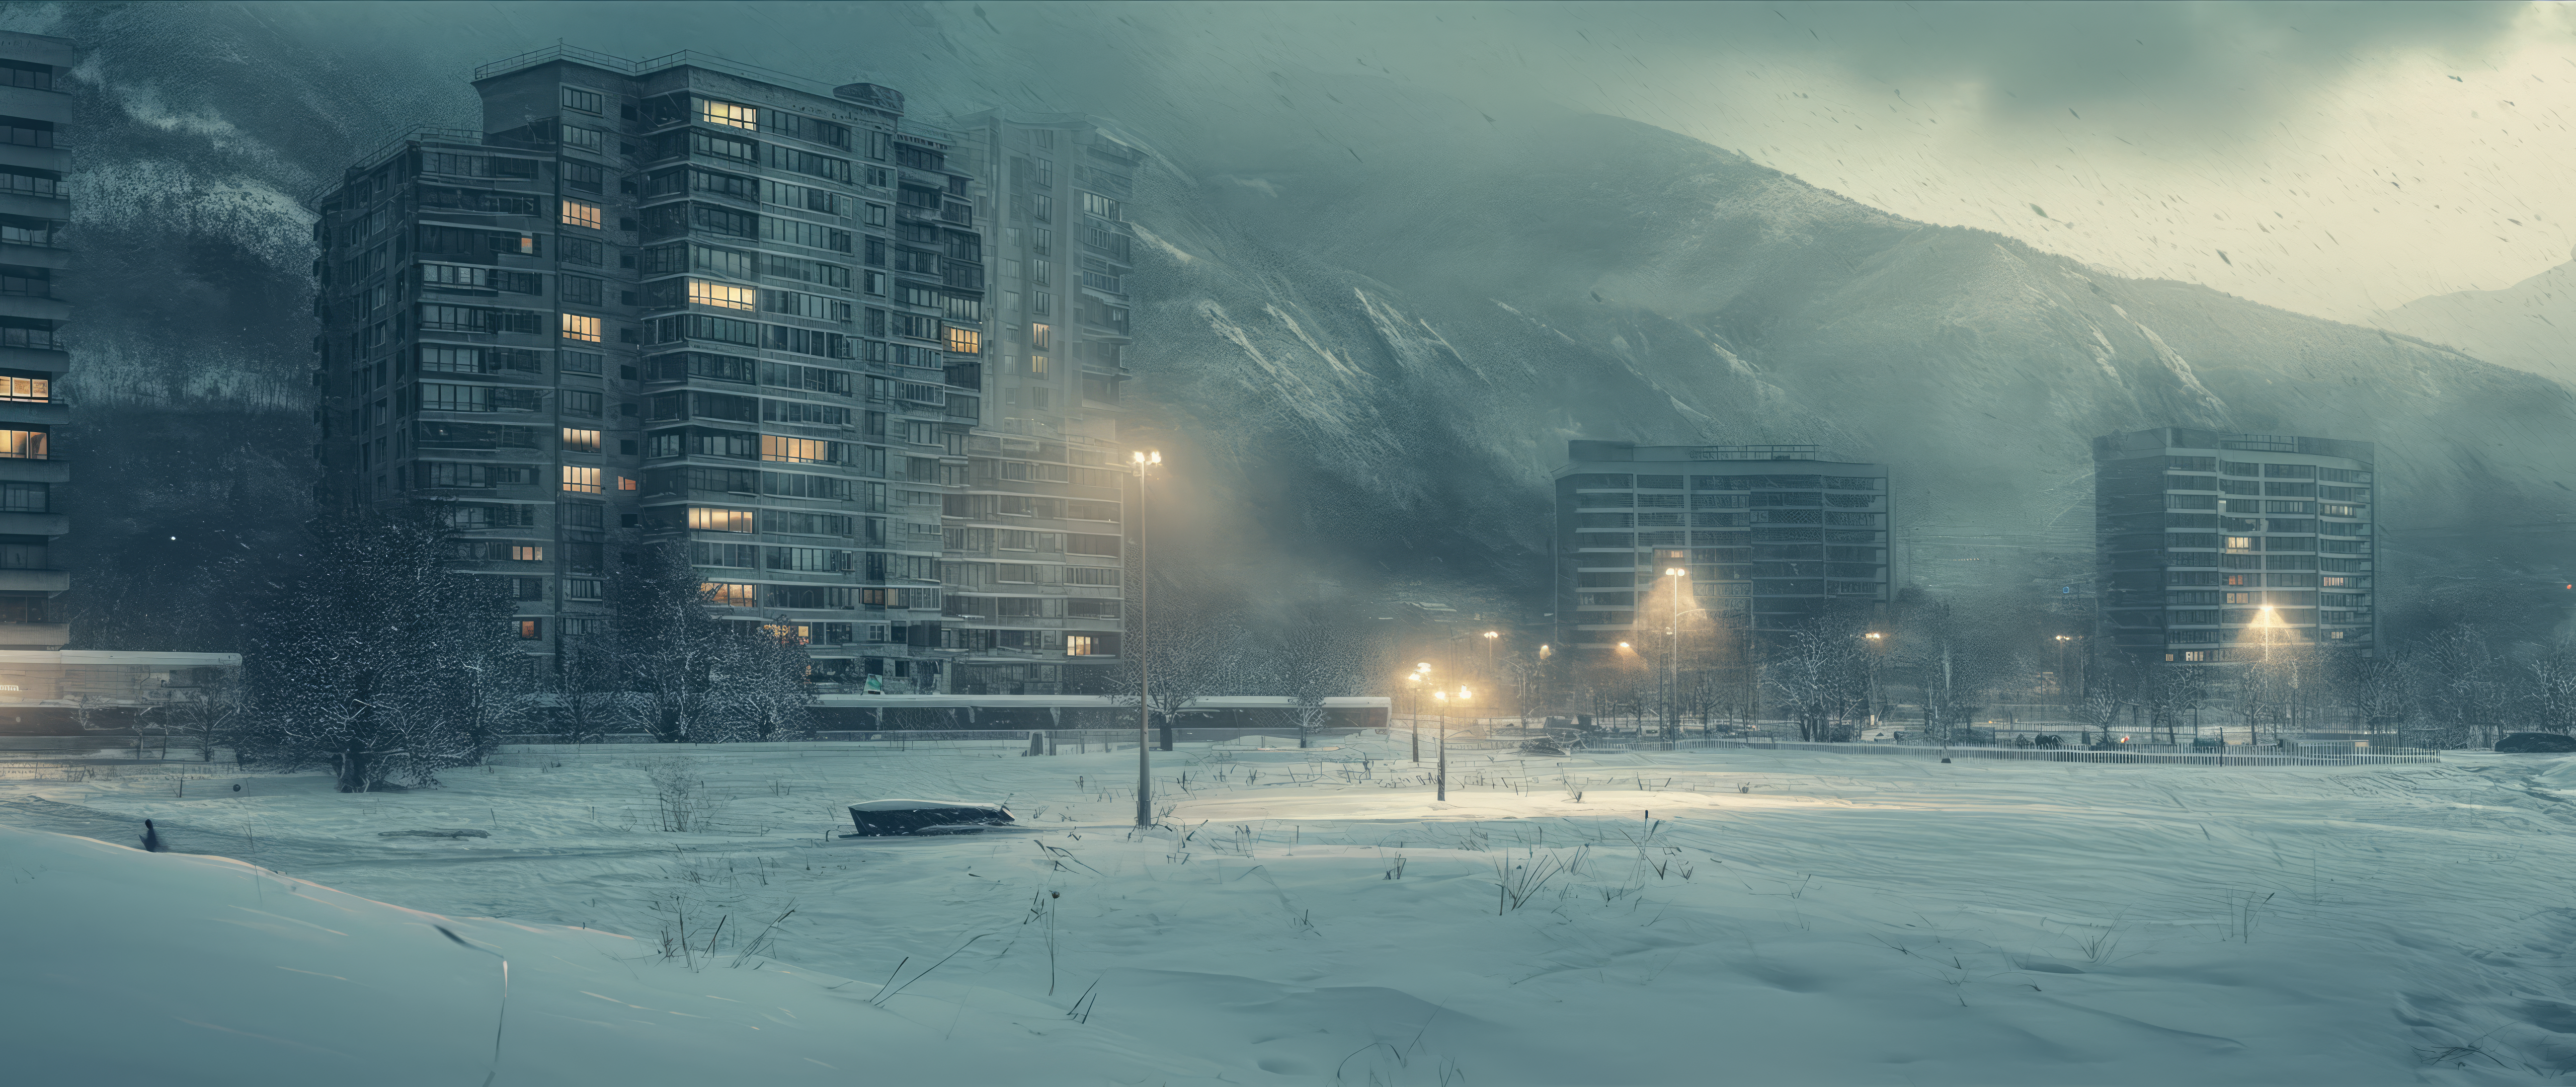 General 5120x2160 snow wide angle city landscape Midjourney winter digital art AI art block of flats building street light